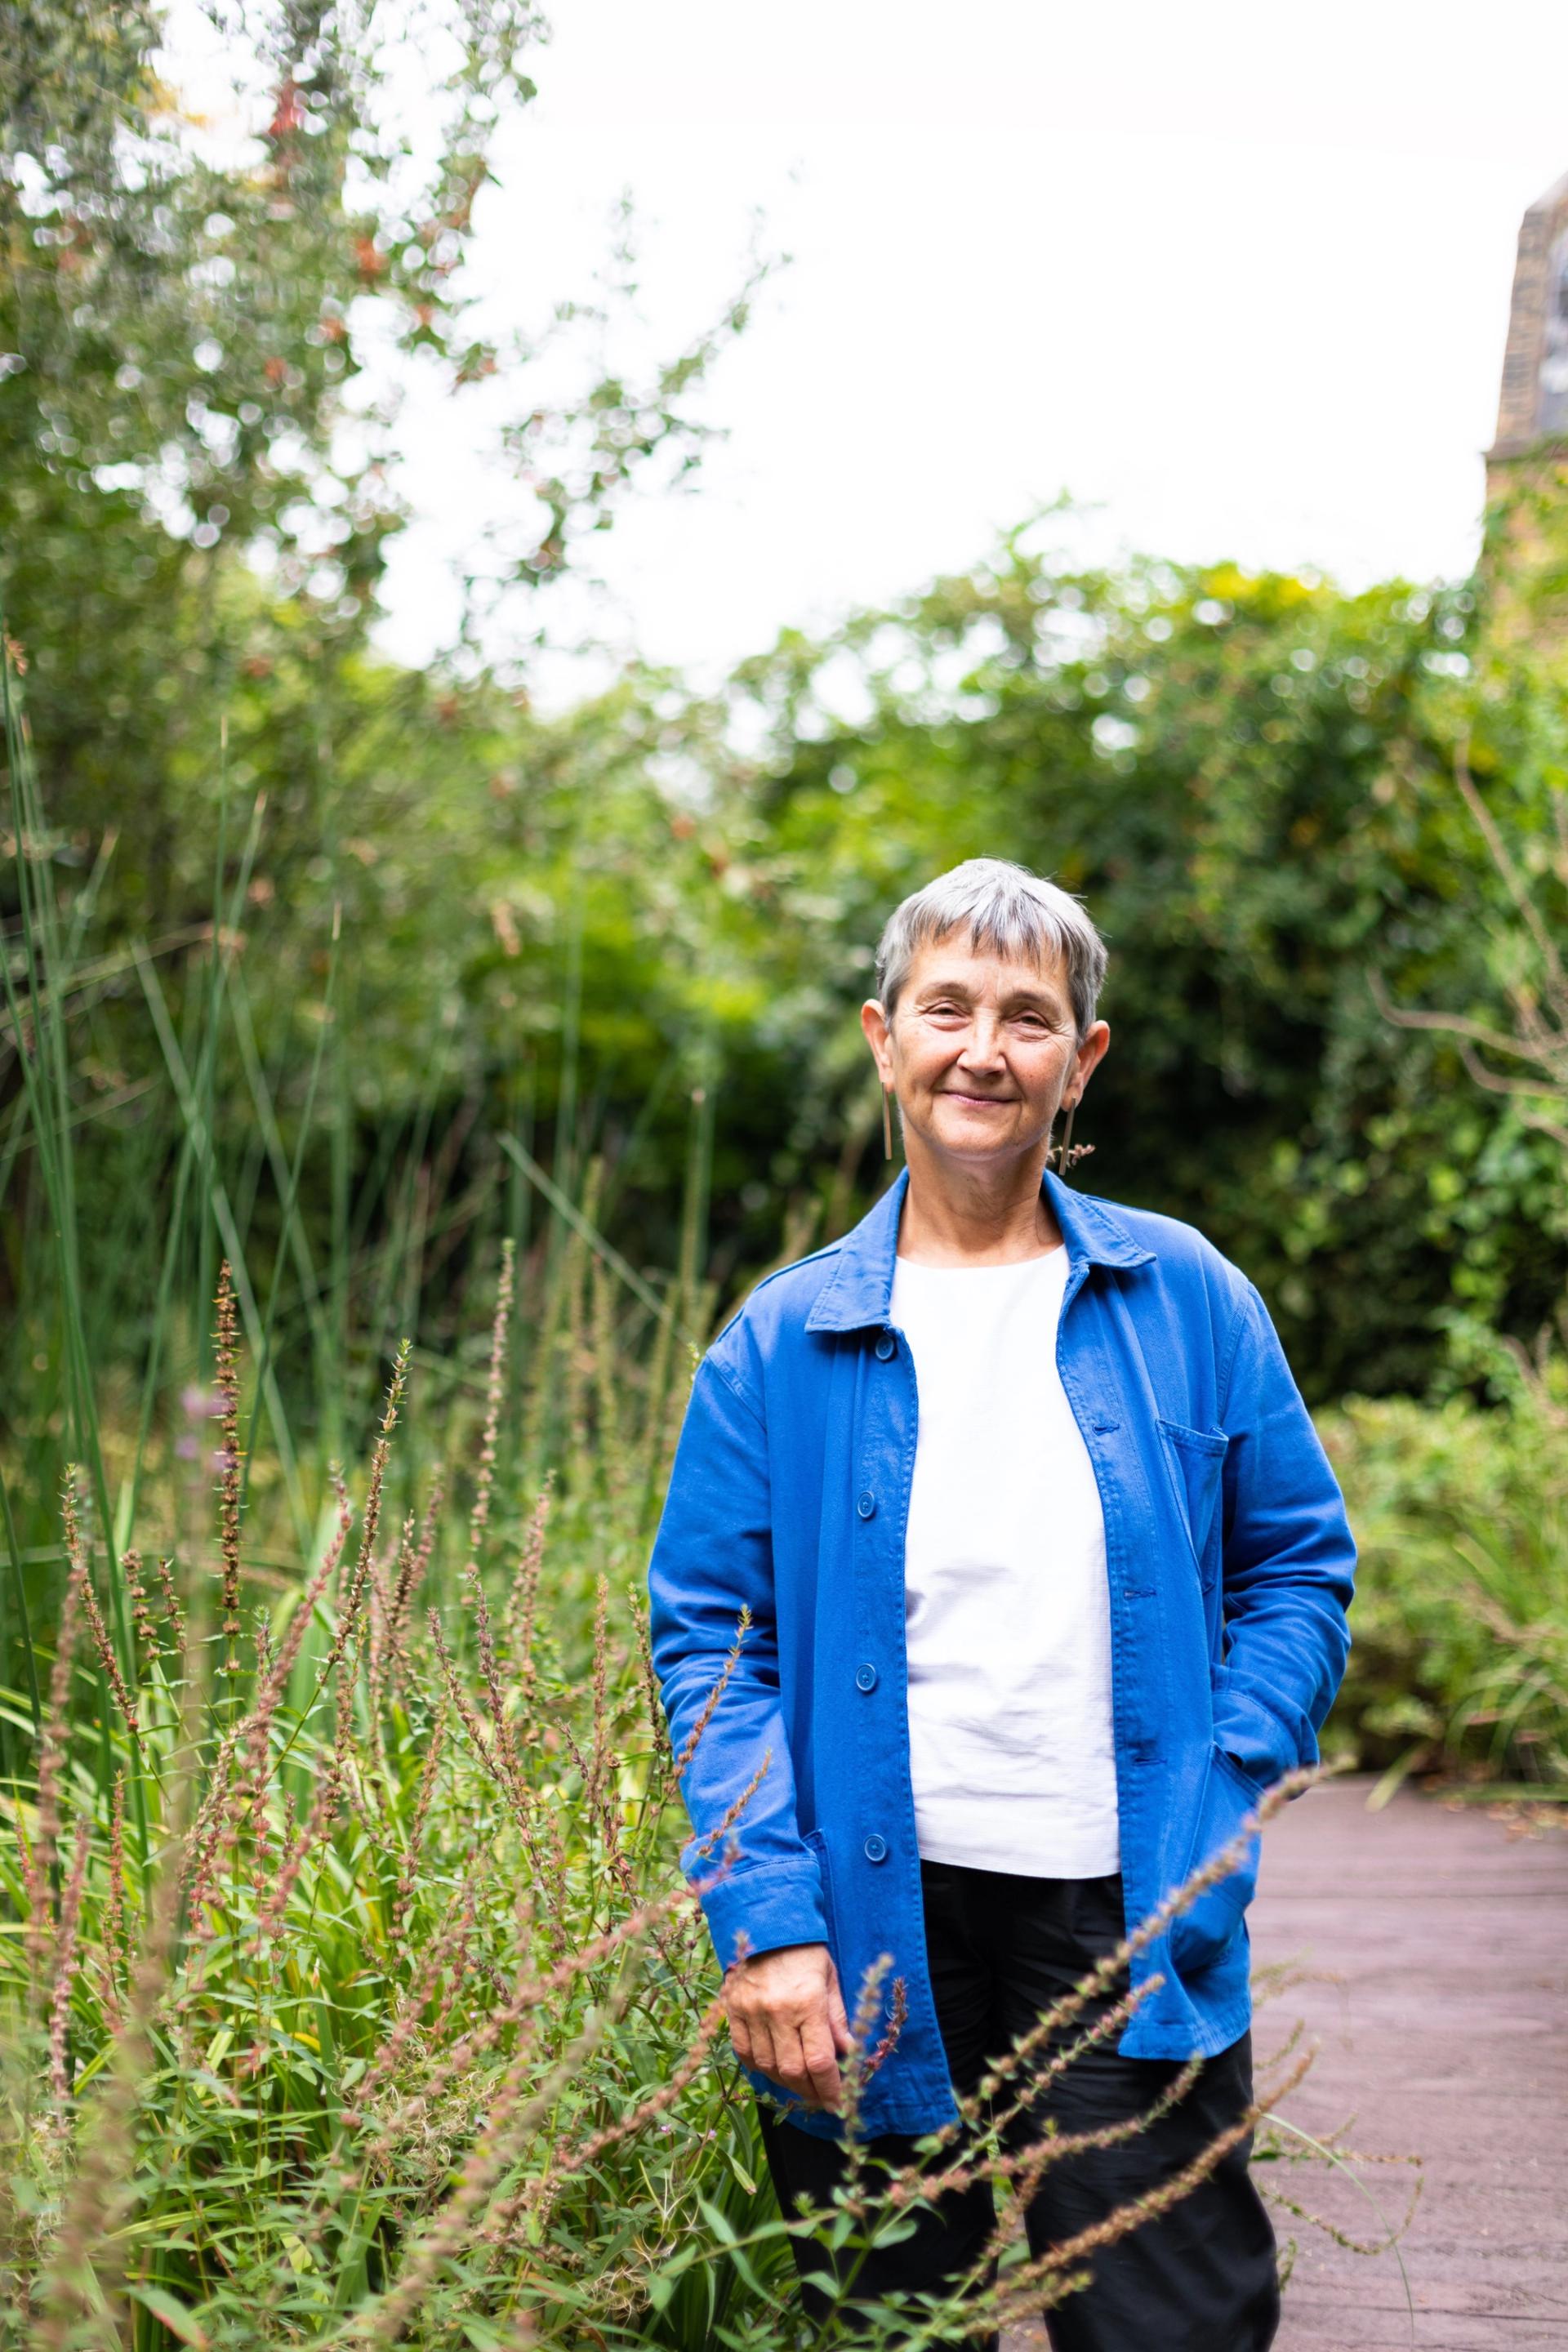 Frances Morris in the Tate Modern Community Garden. 

Photo © Samia Meah